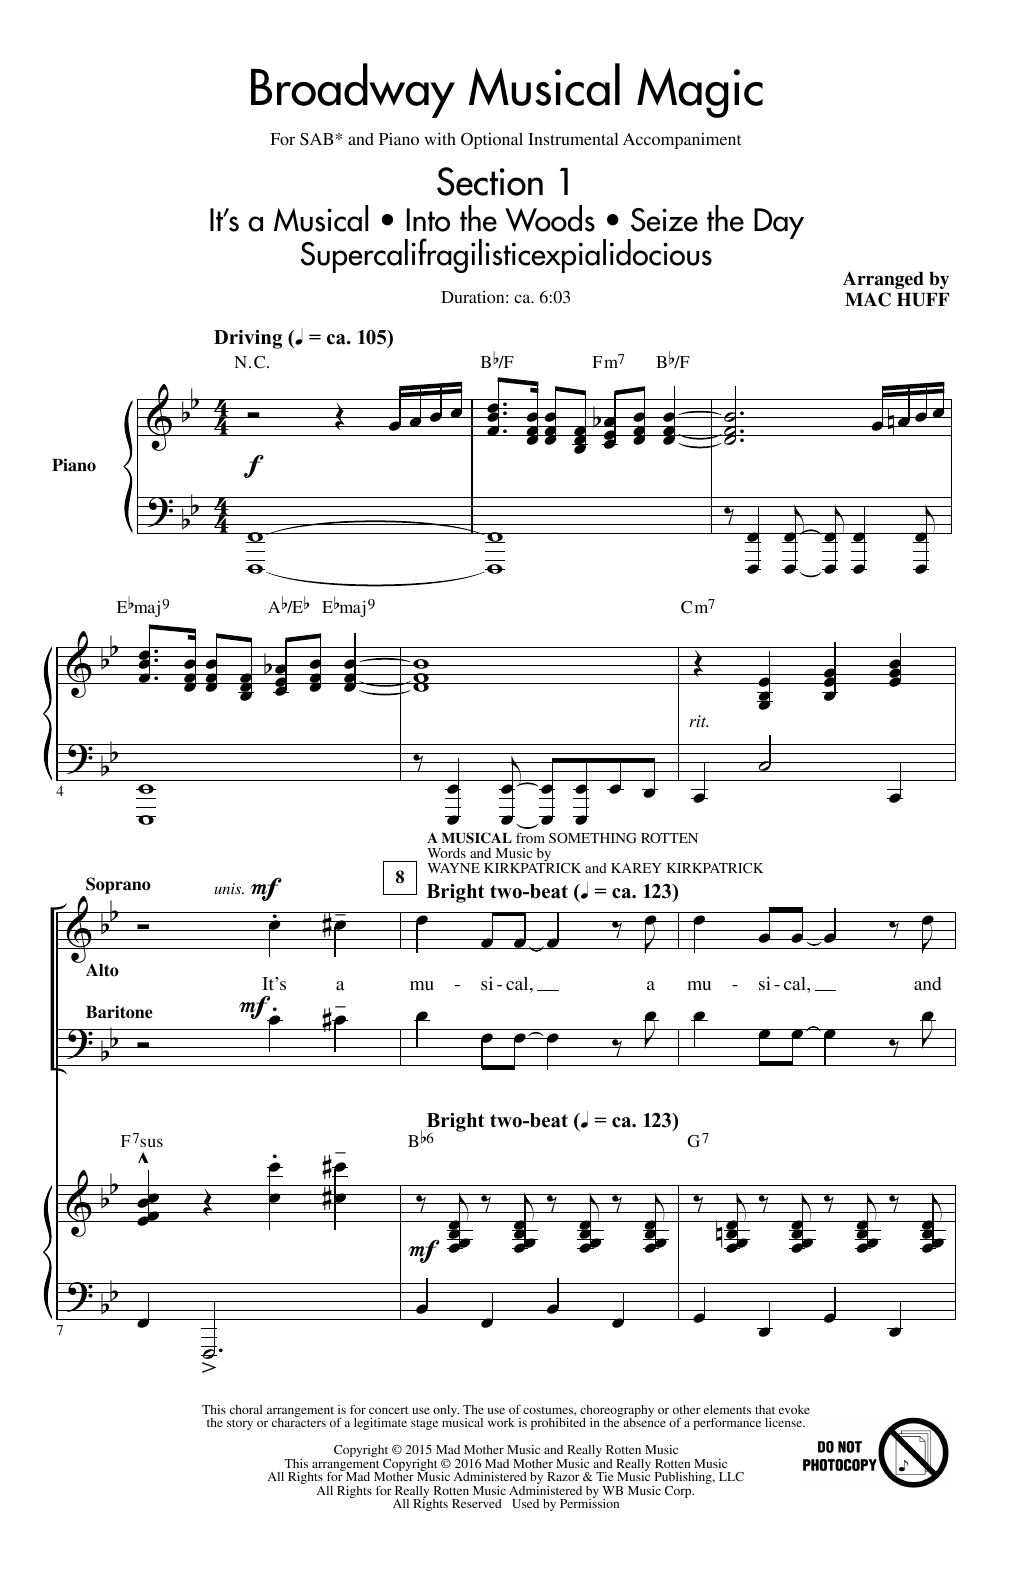 Mac Huff Broadway Musical Magic Sheet Music Notes & Chords for SAB - Download or Print PDF